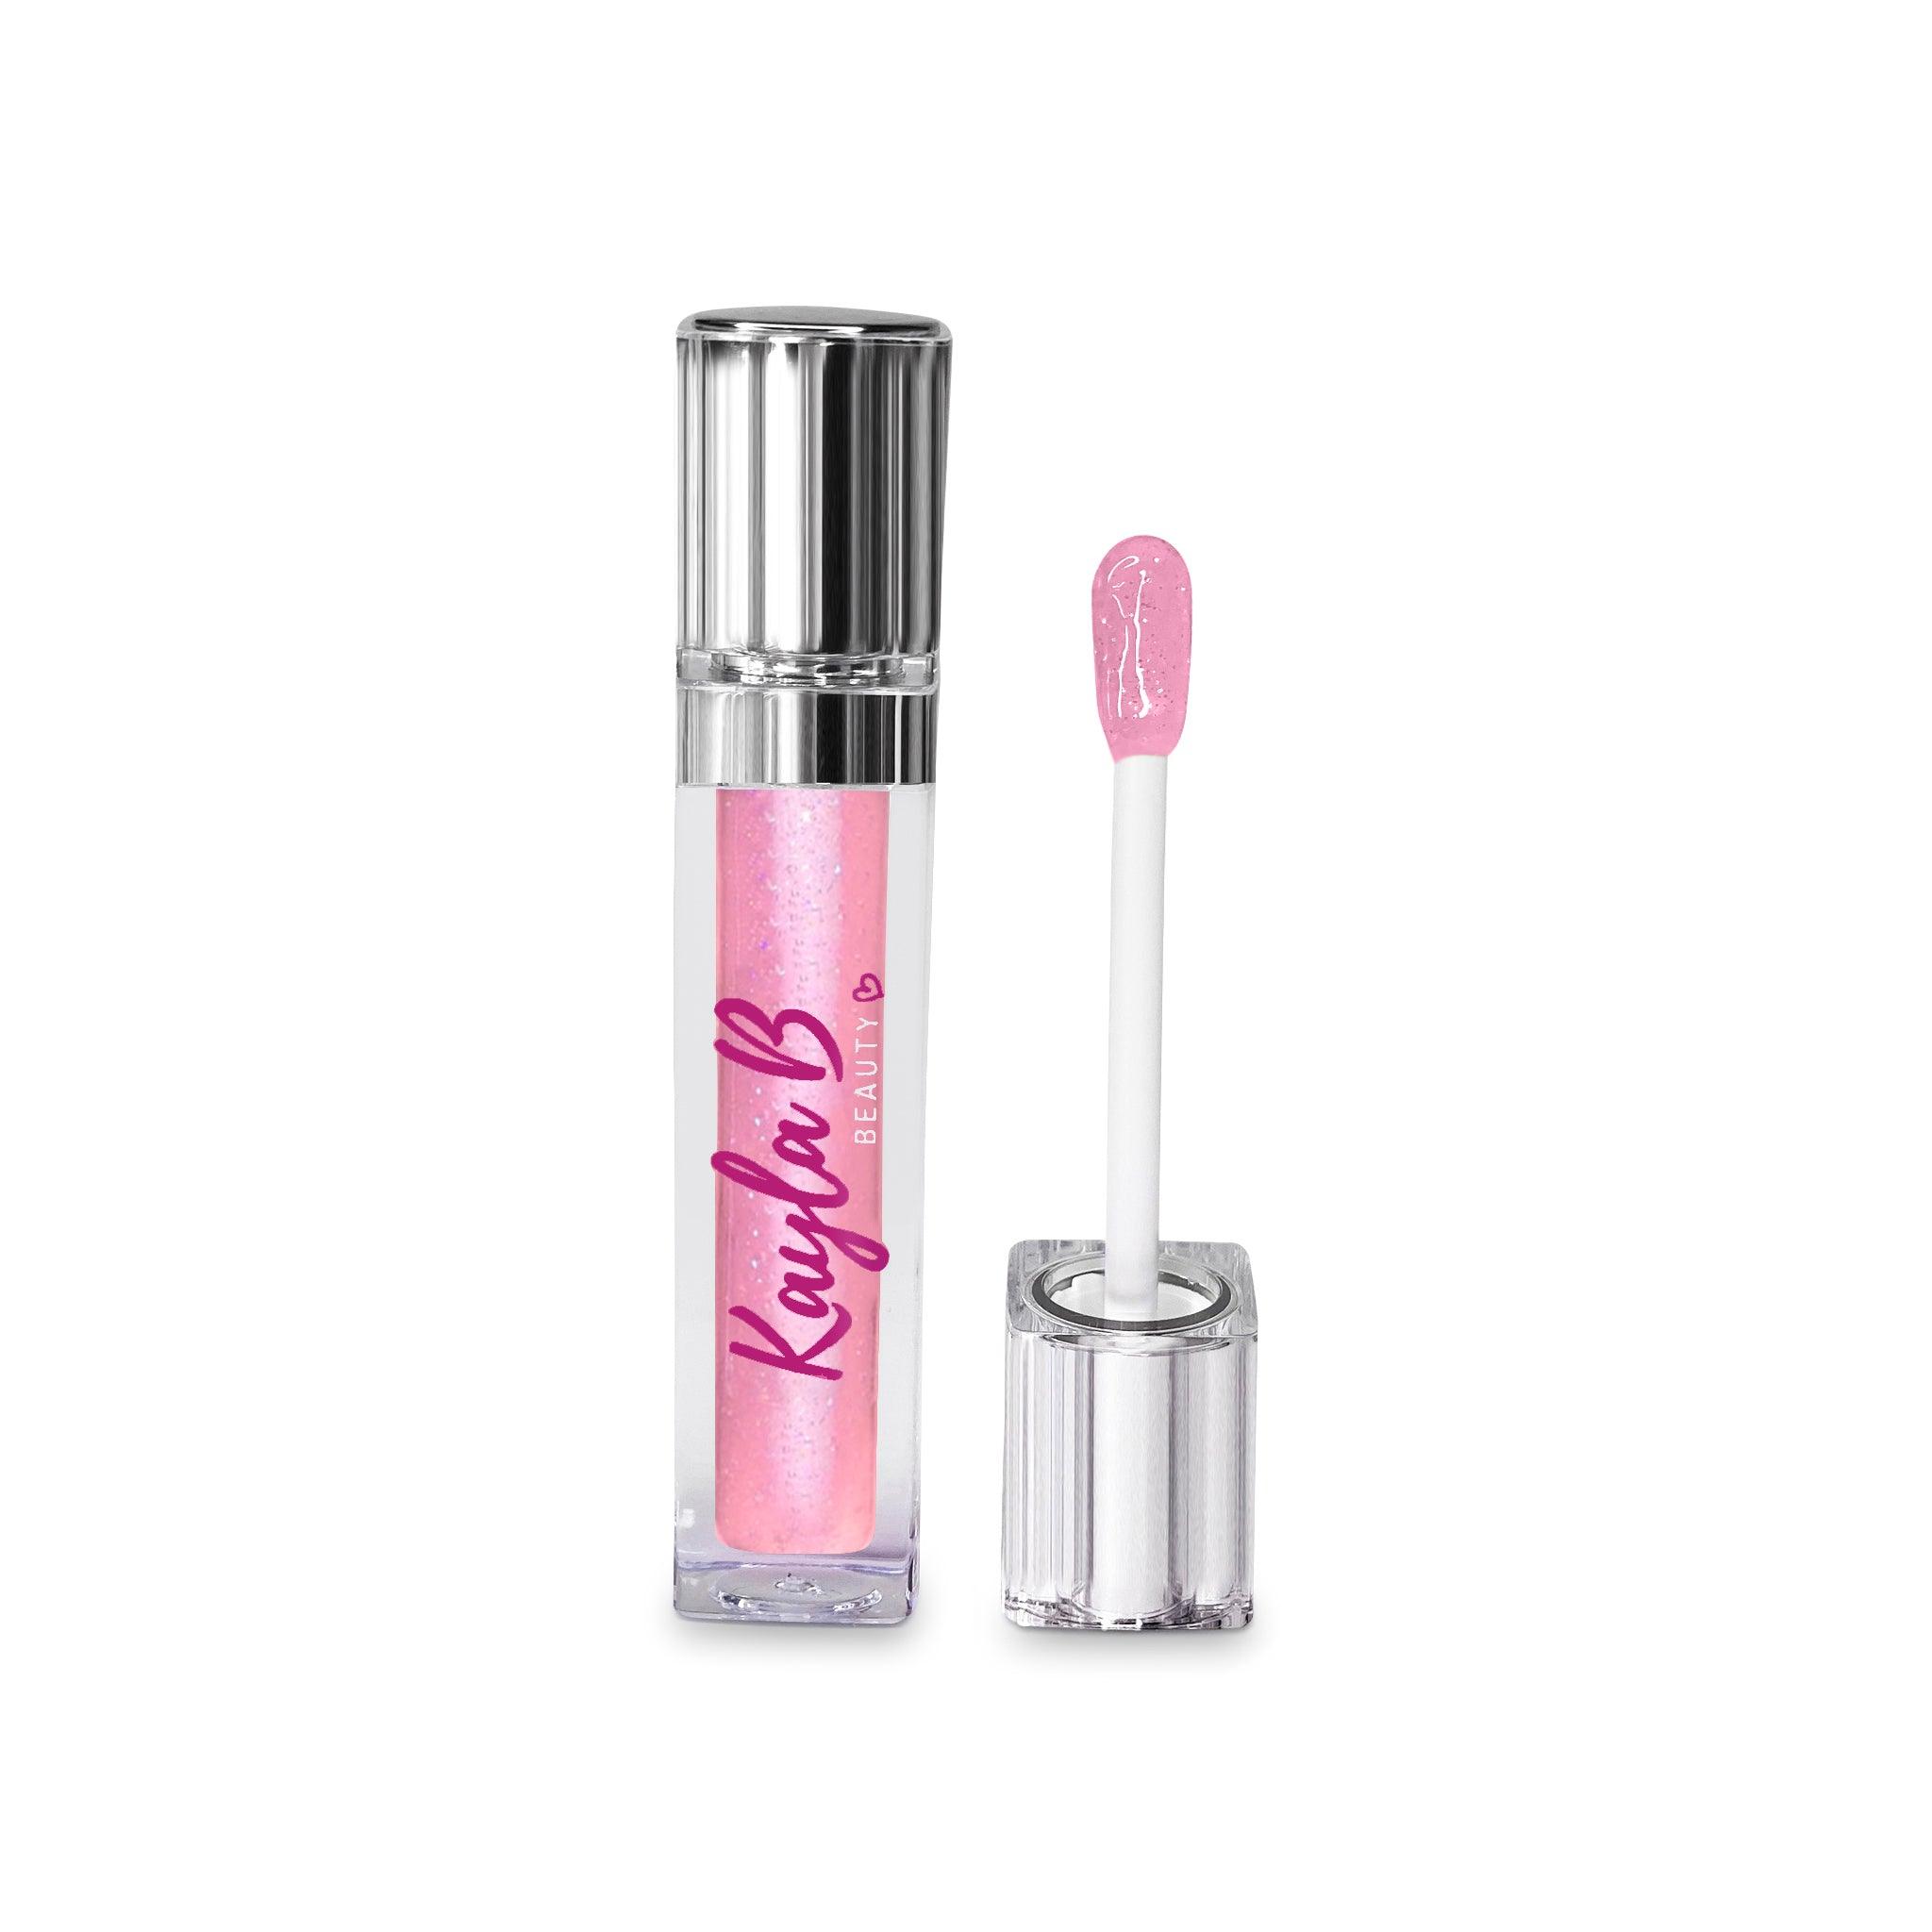 Fairytale - Kayla B Beauty - Flavored Lip Gloss, Glitter Lip Gloss